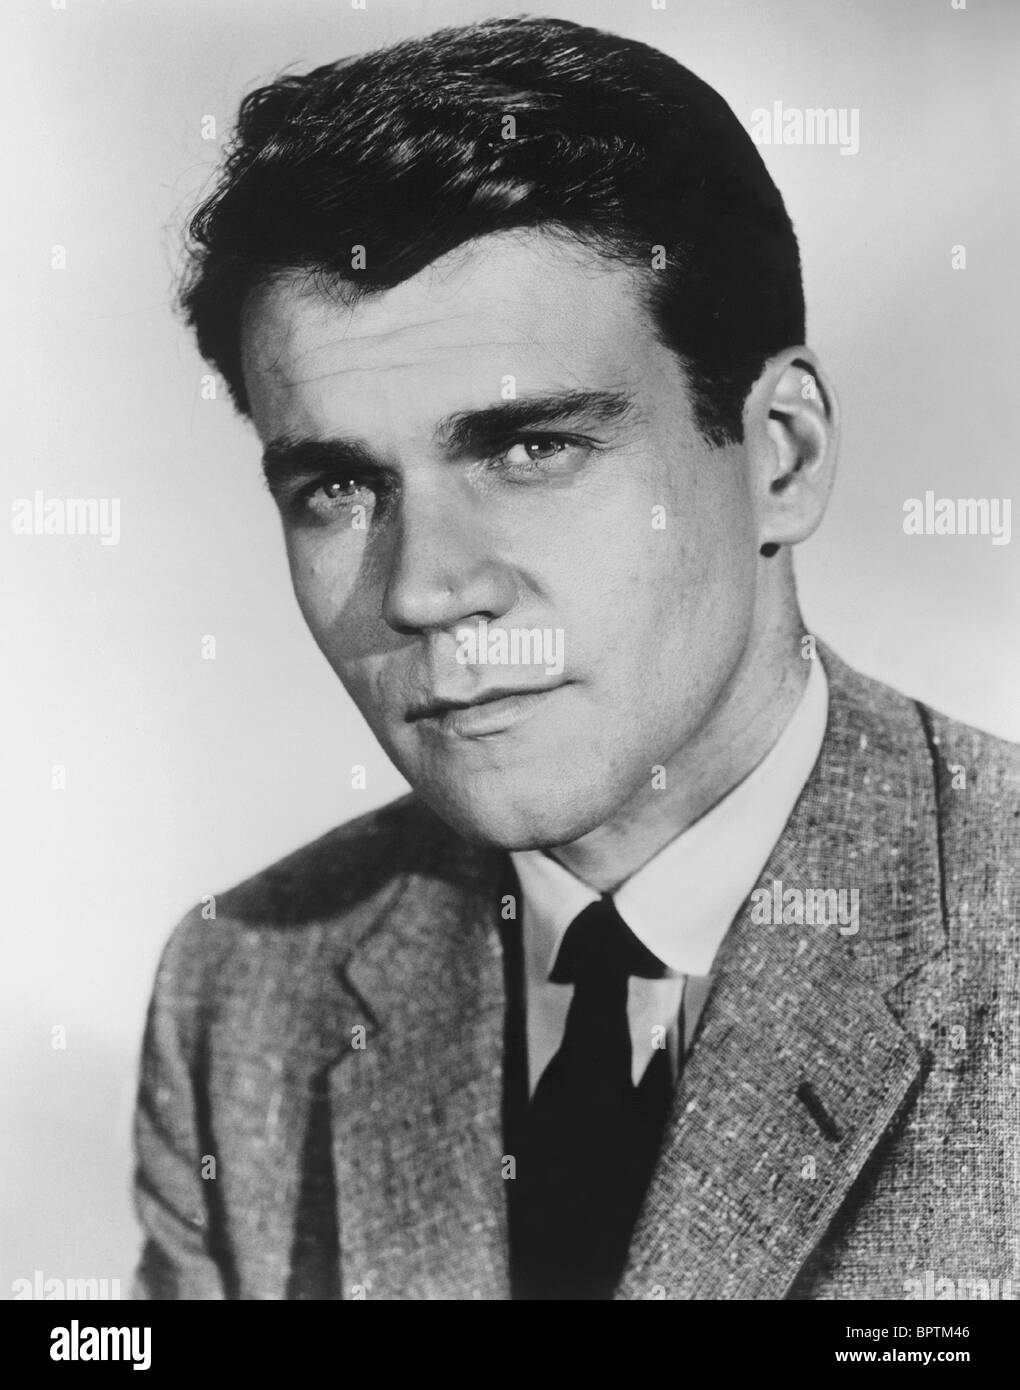 DON MURRAY ACTOR (1961 Stock Photo - Alamy